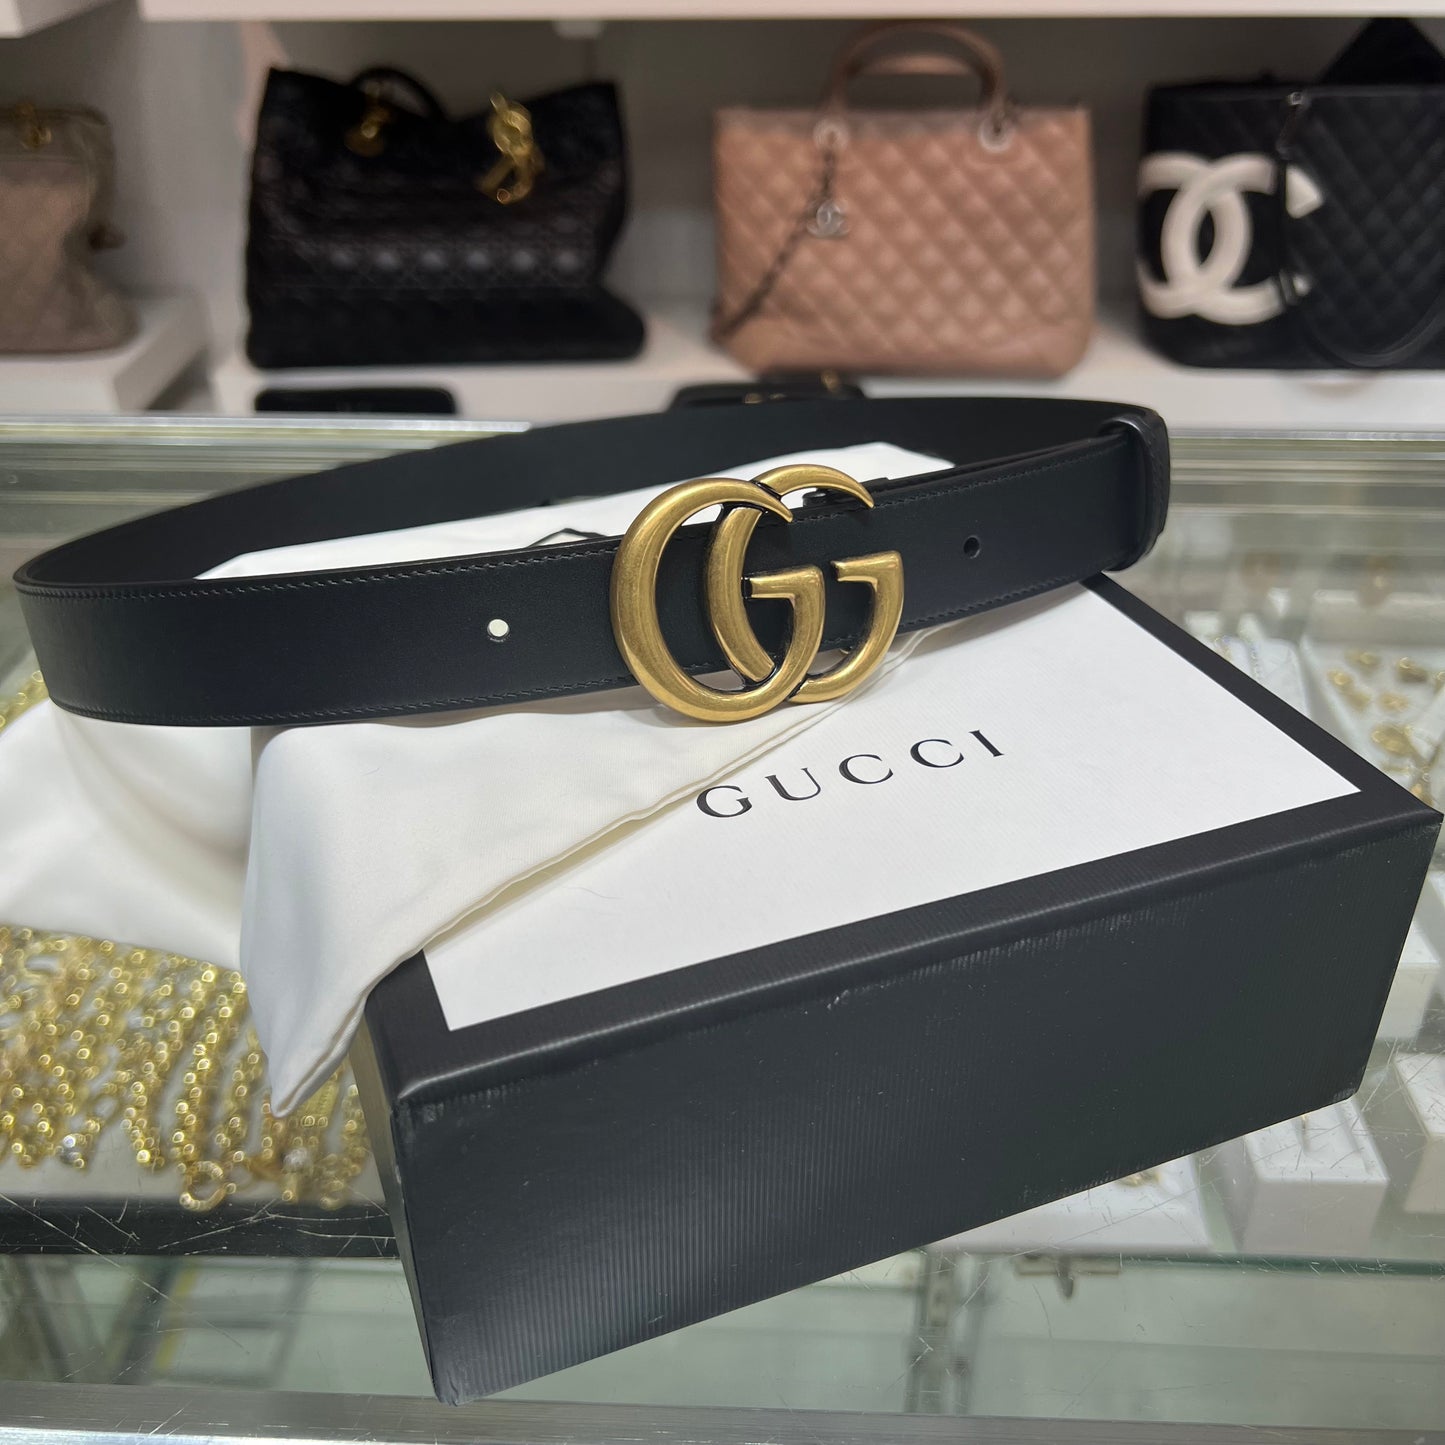 Gucci Marmont Belt Black/Gold, Size 95